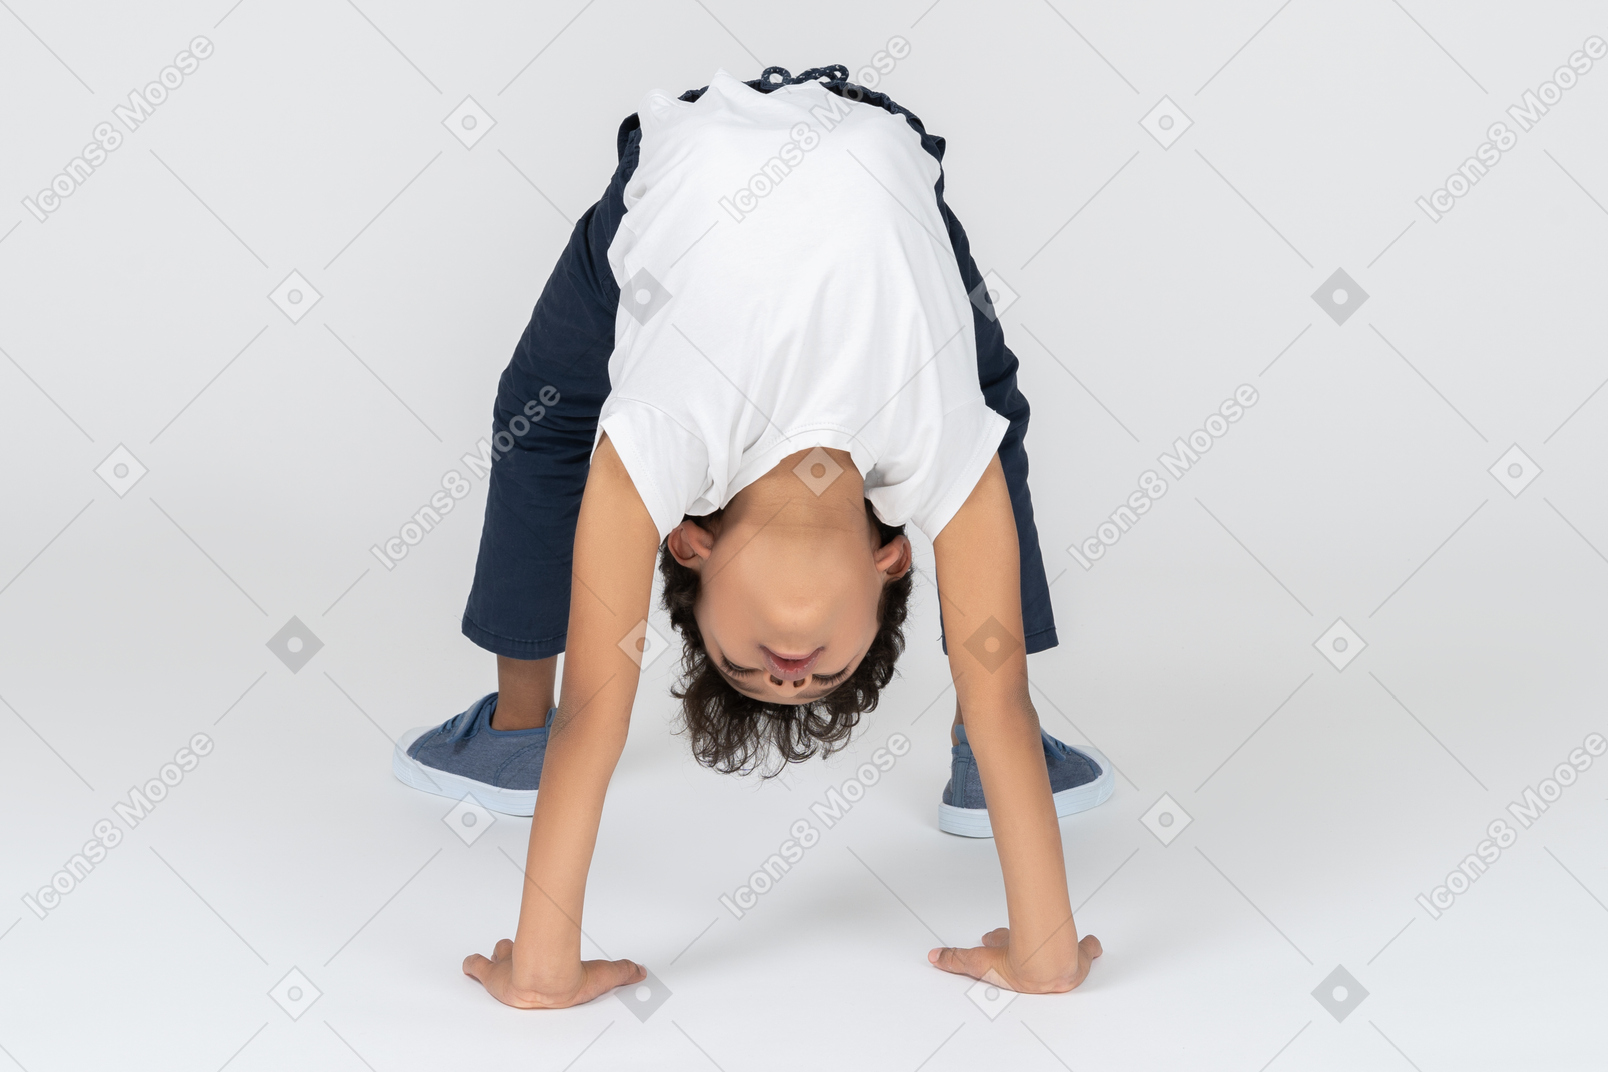 A boy doing bridge exercise